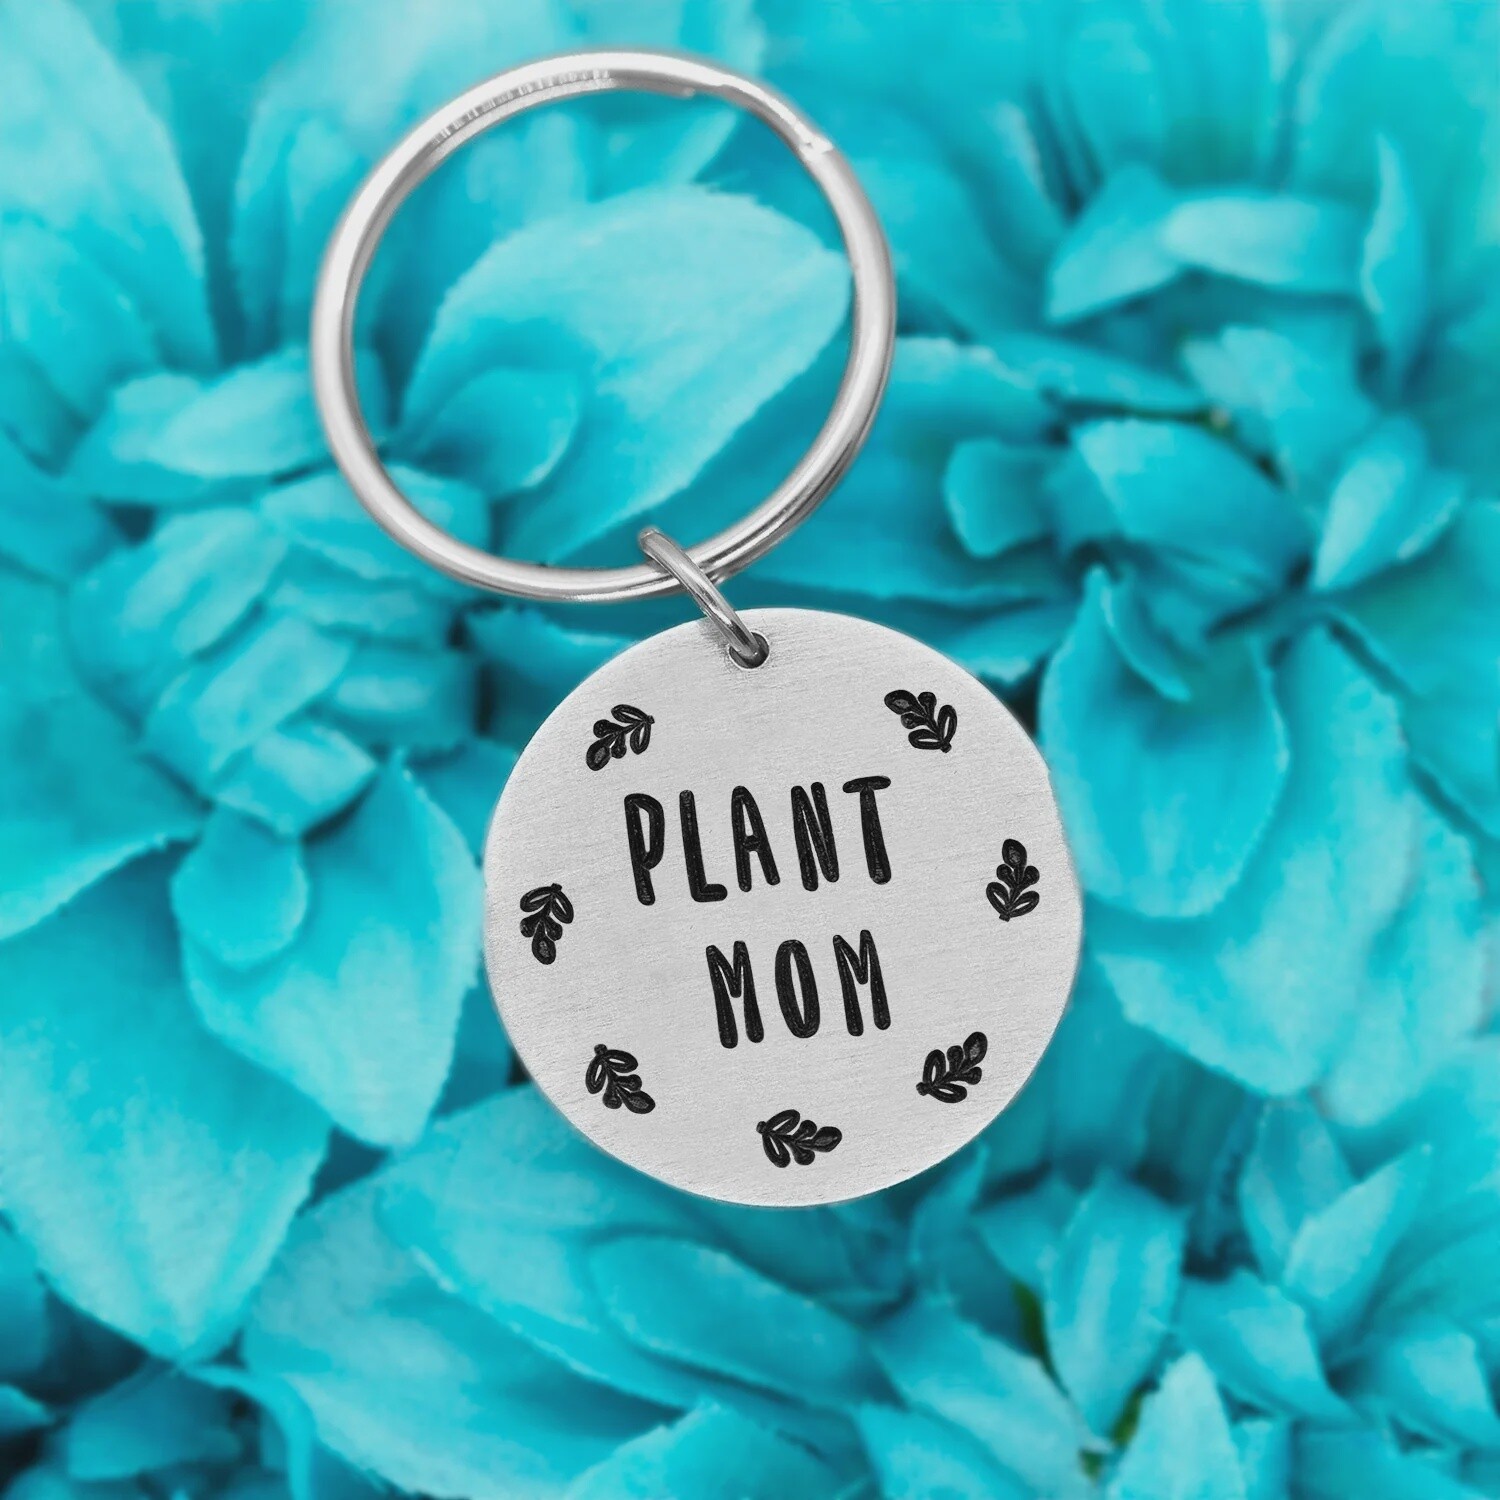 “Plant mom” Keychain